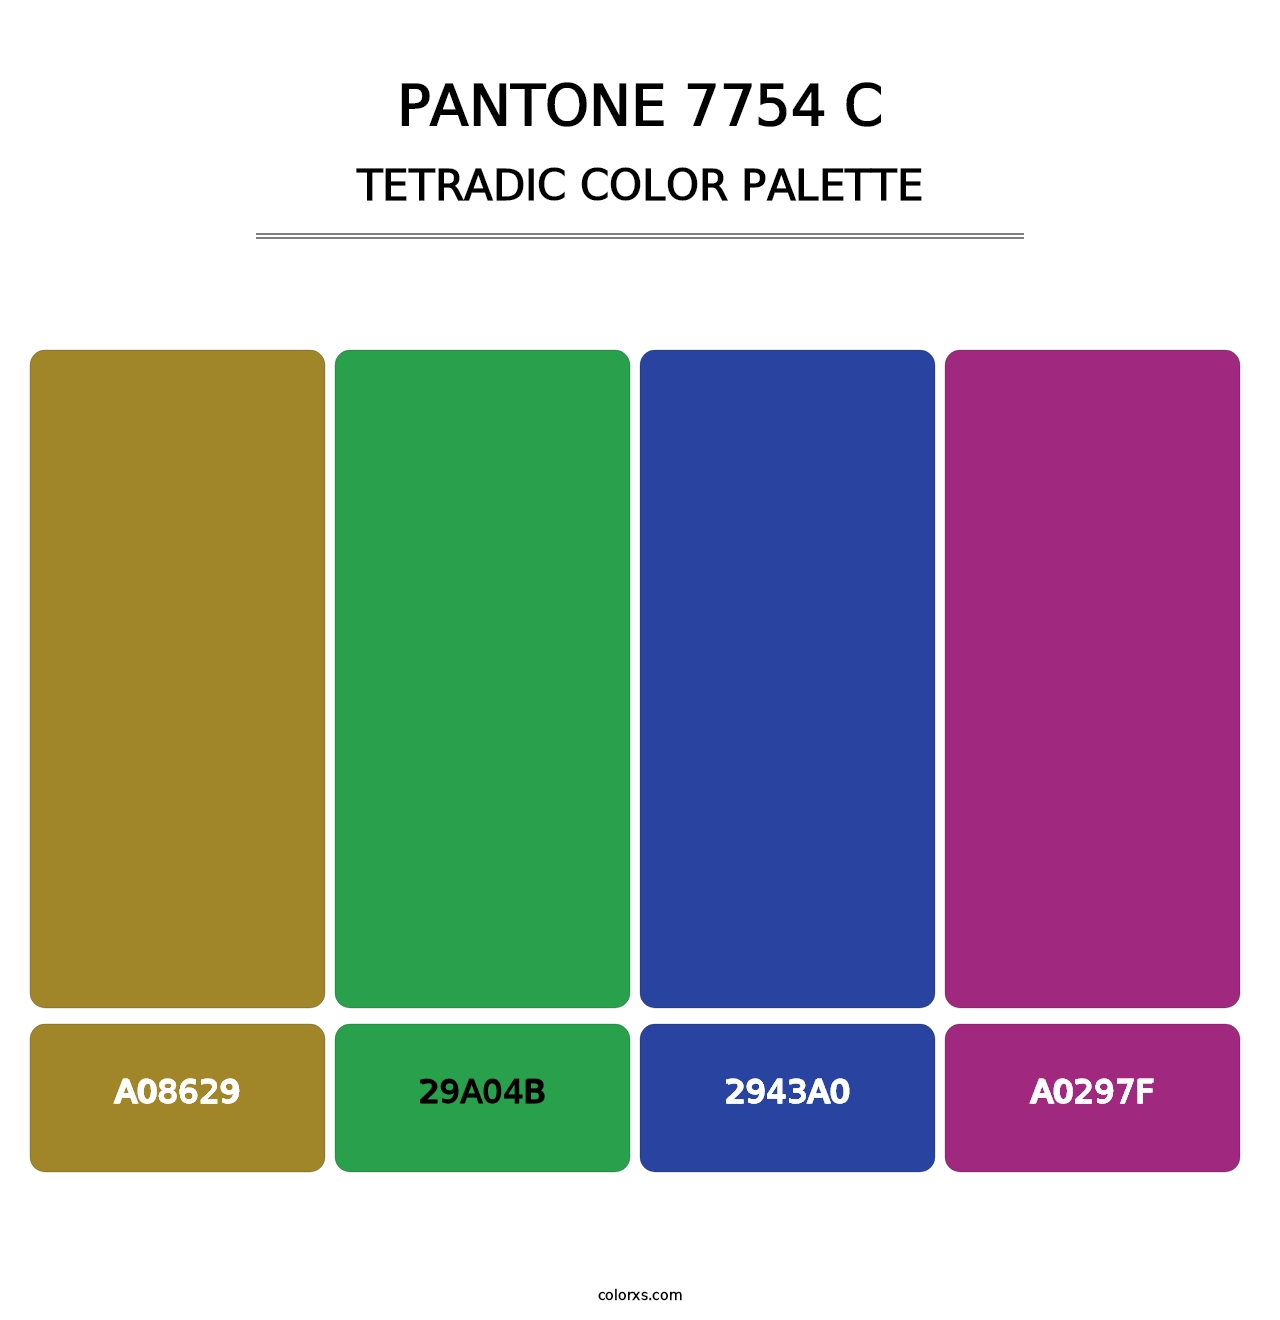 PANTONE 7754 C - Tetradic Color Palette